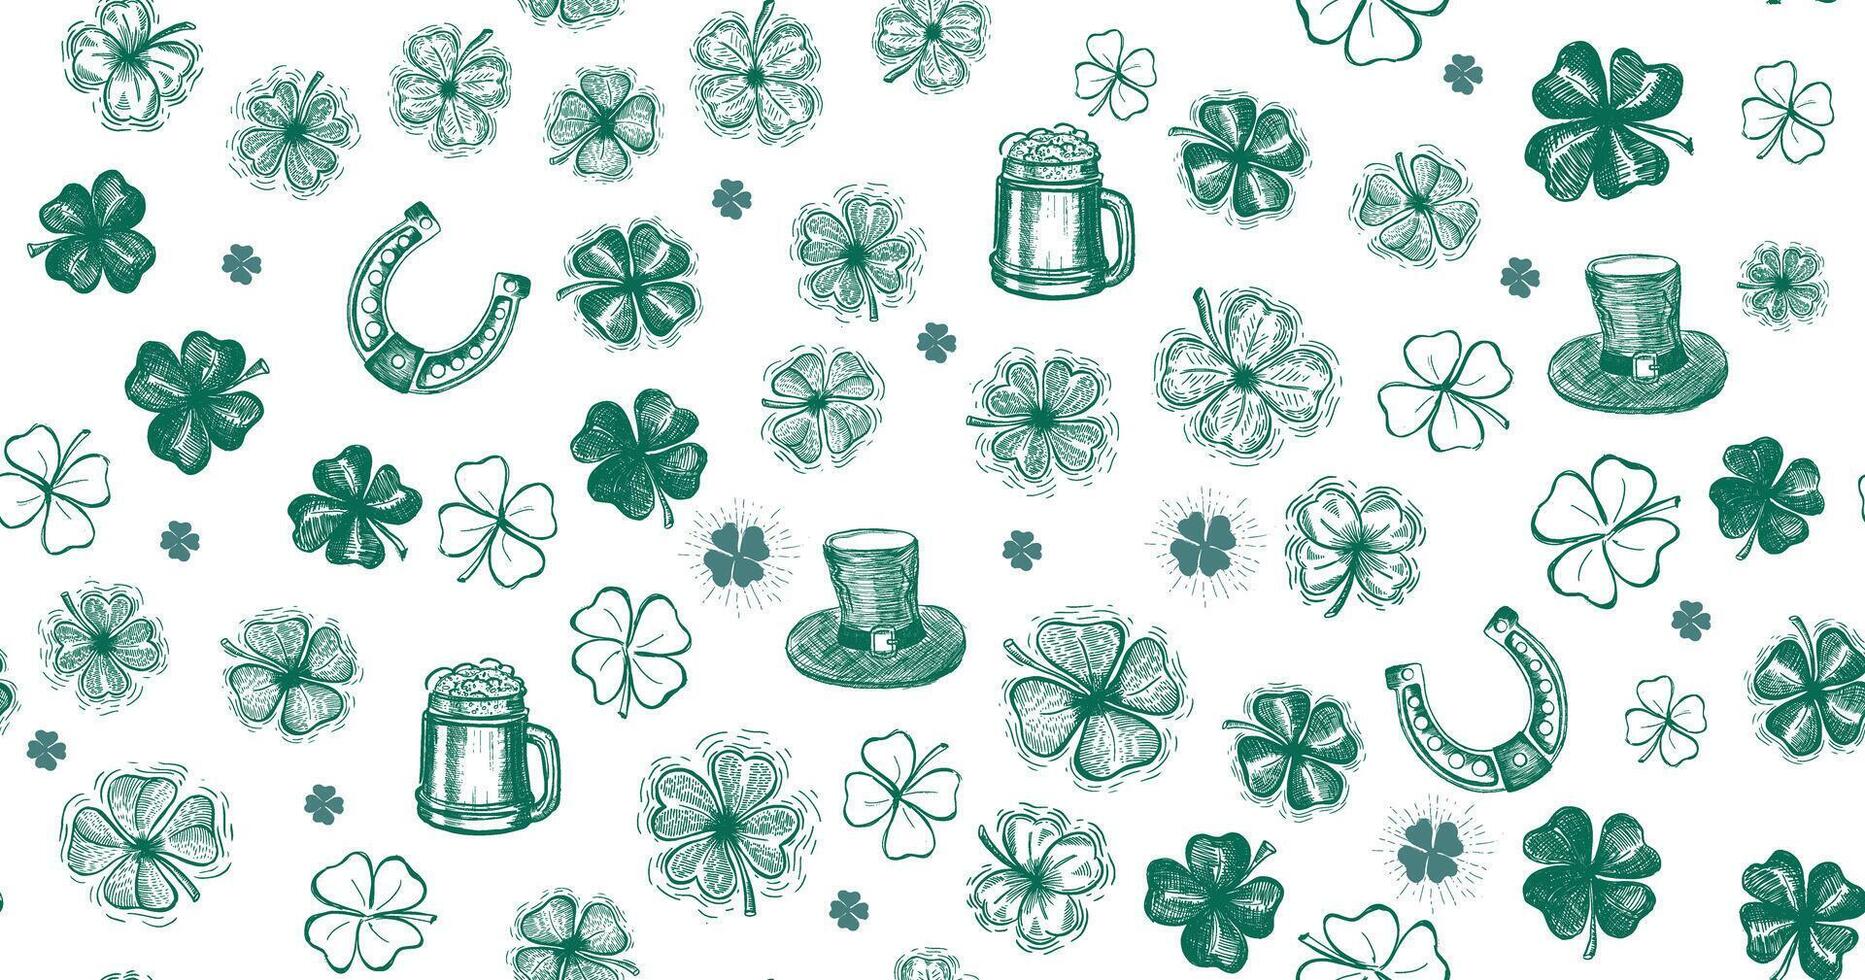 St. Patrick's Day set. Hand drawn illustrations vector